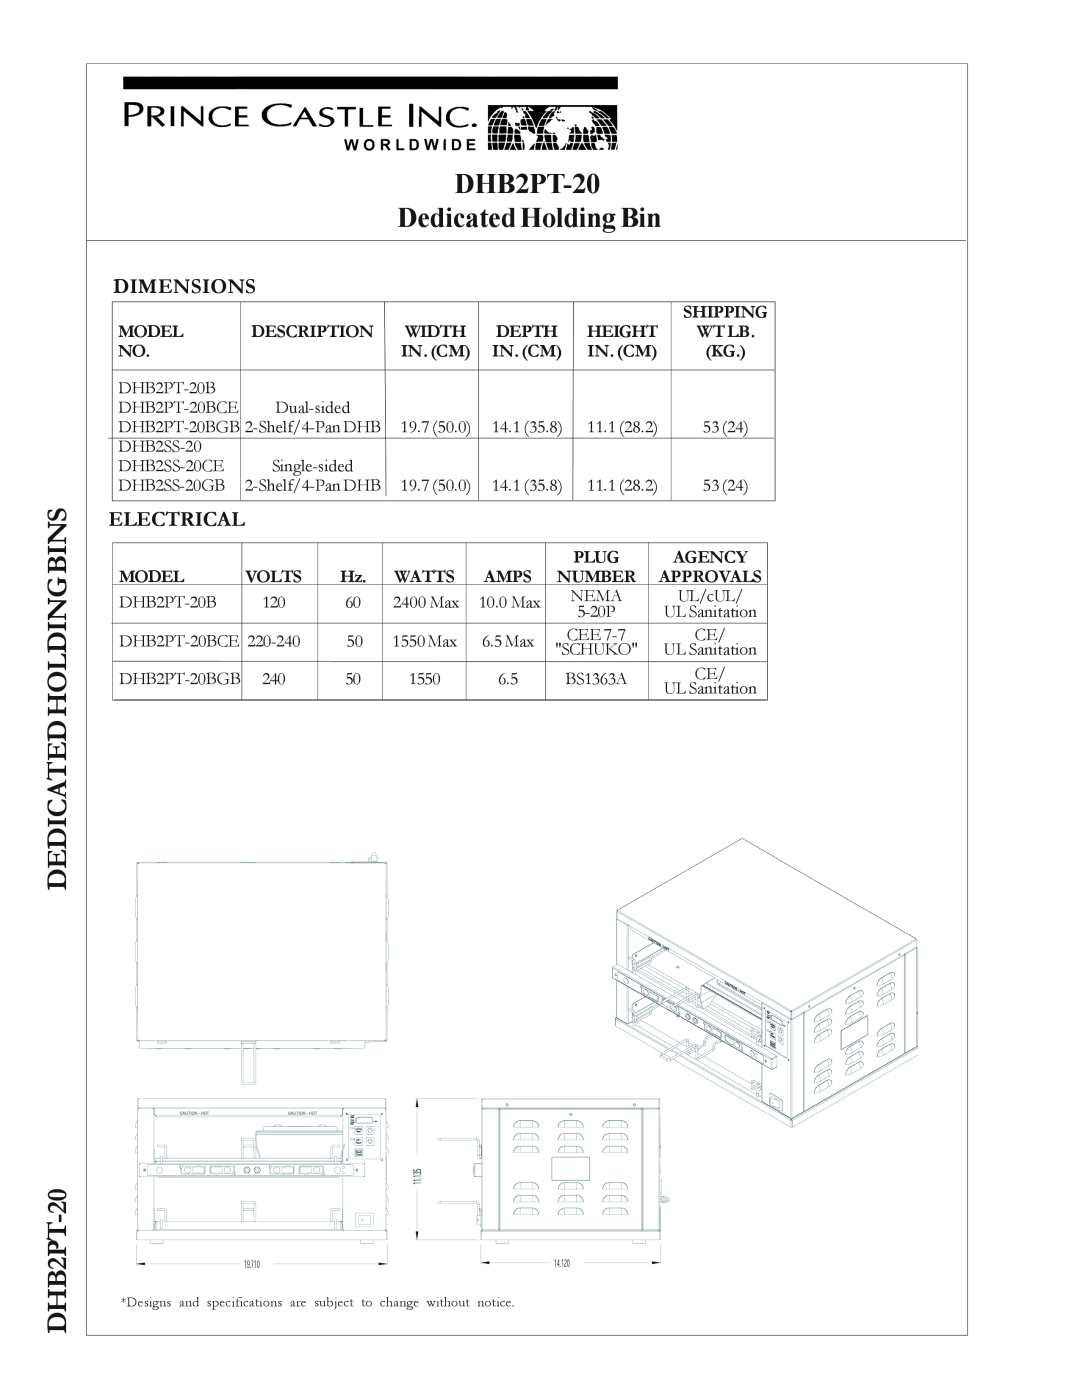 Prince Castle warranty DEDICATEDHOLDINGBINS DHB2PT-20, Dedicated Holding Bin, Dimensions, Electrical 